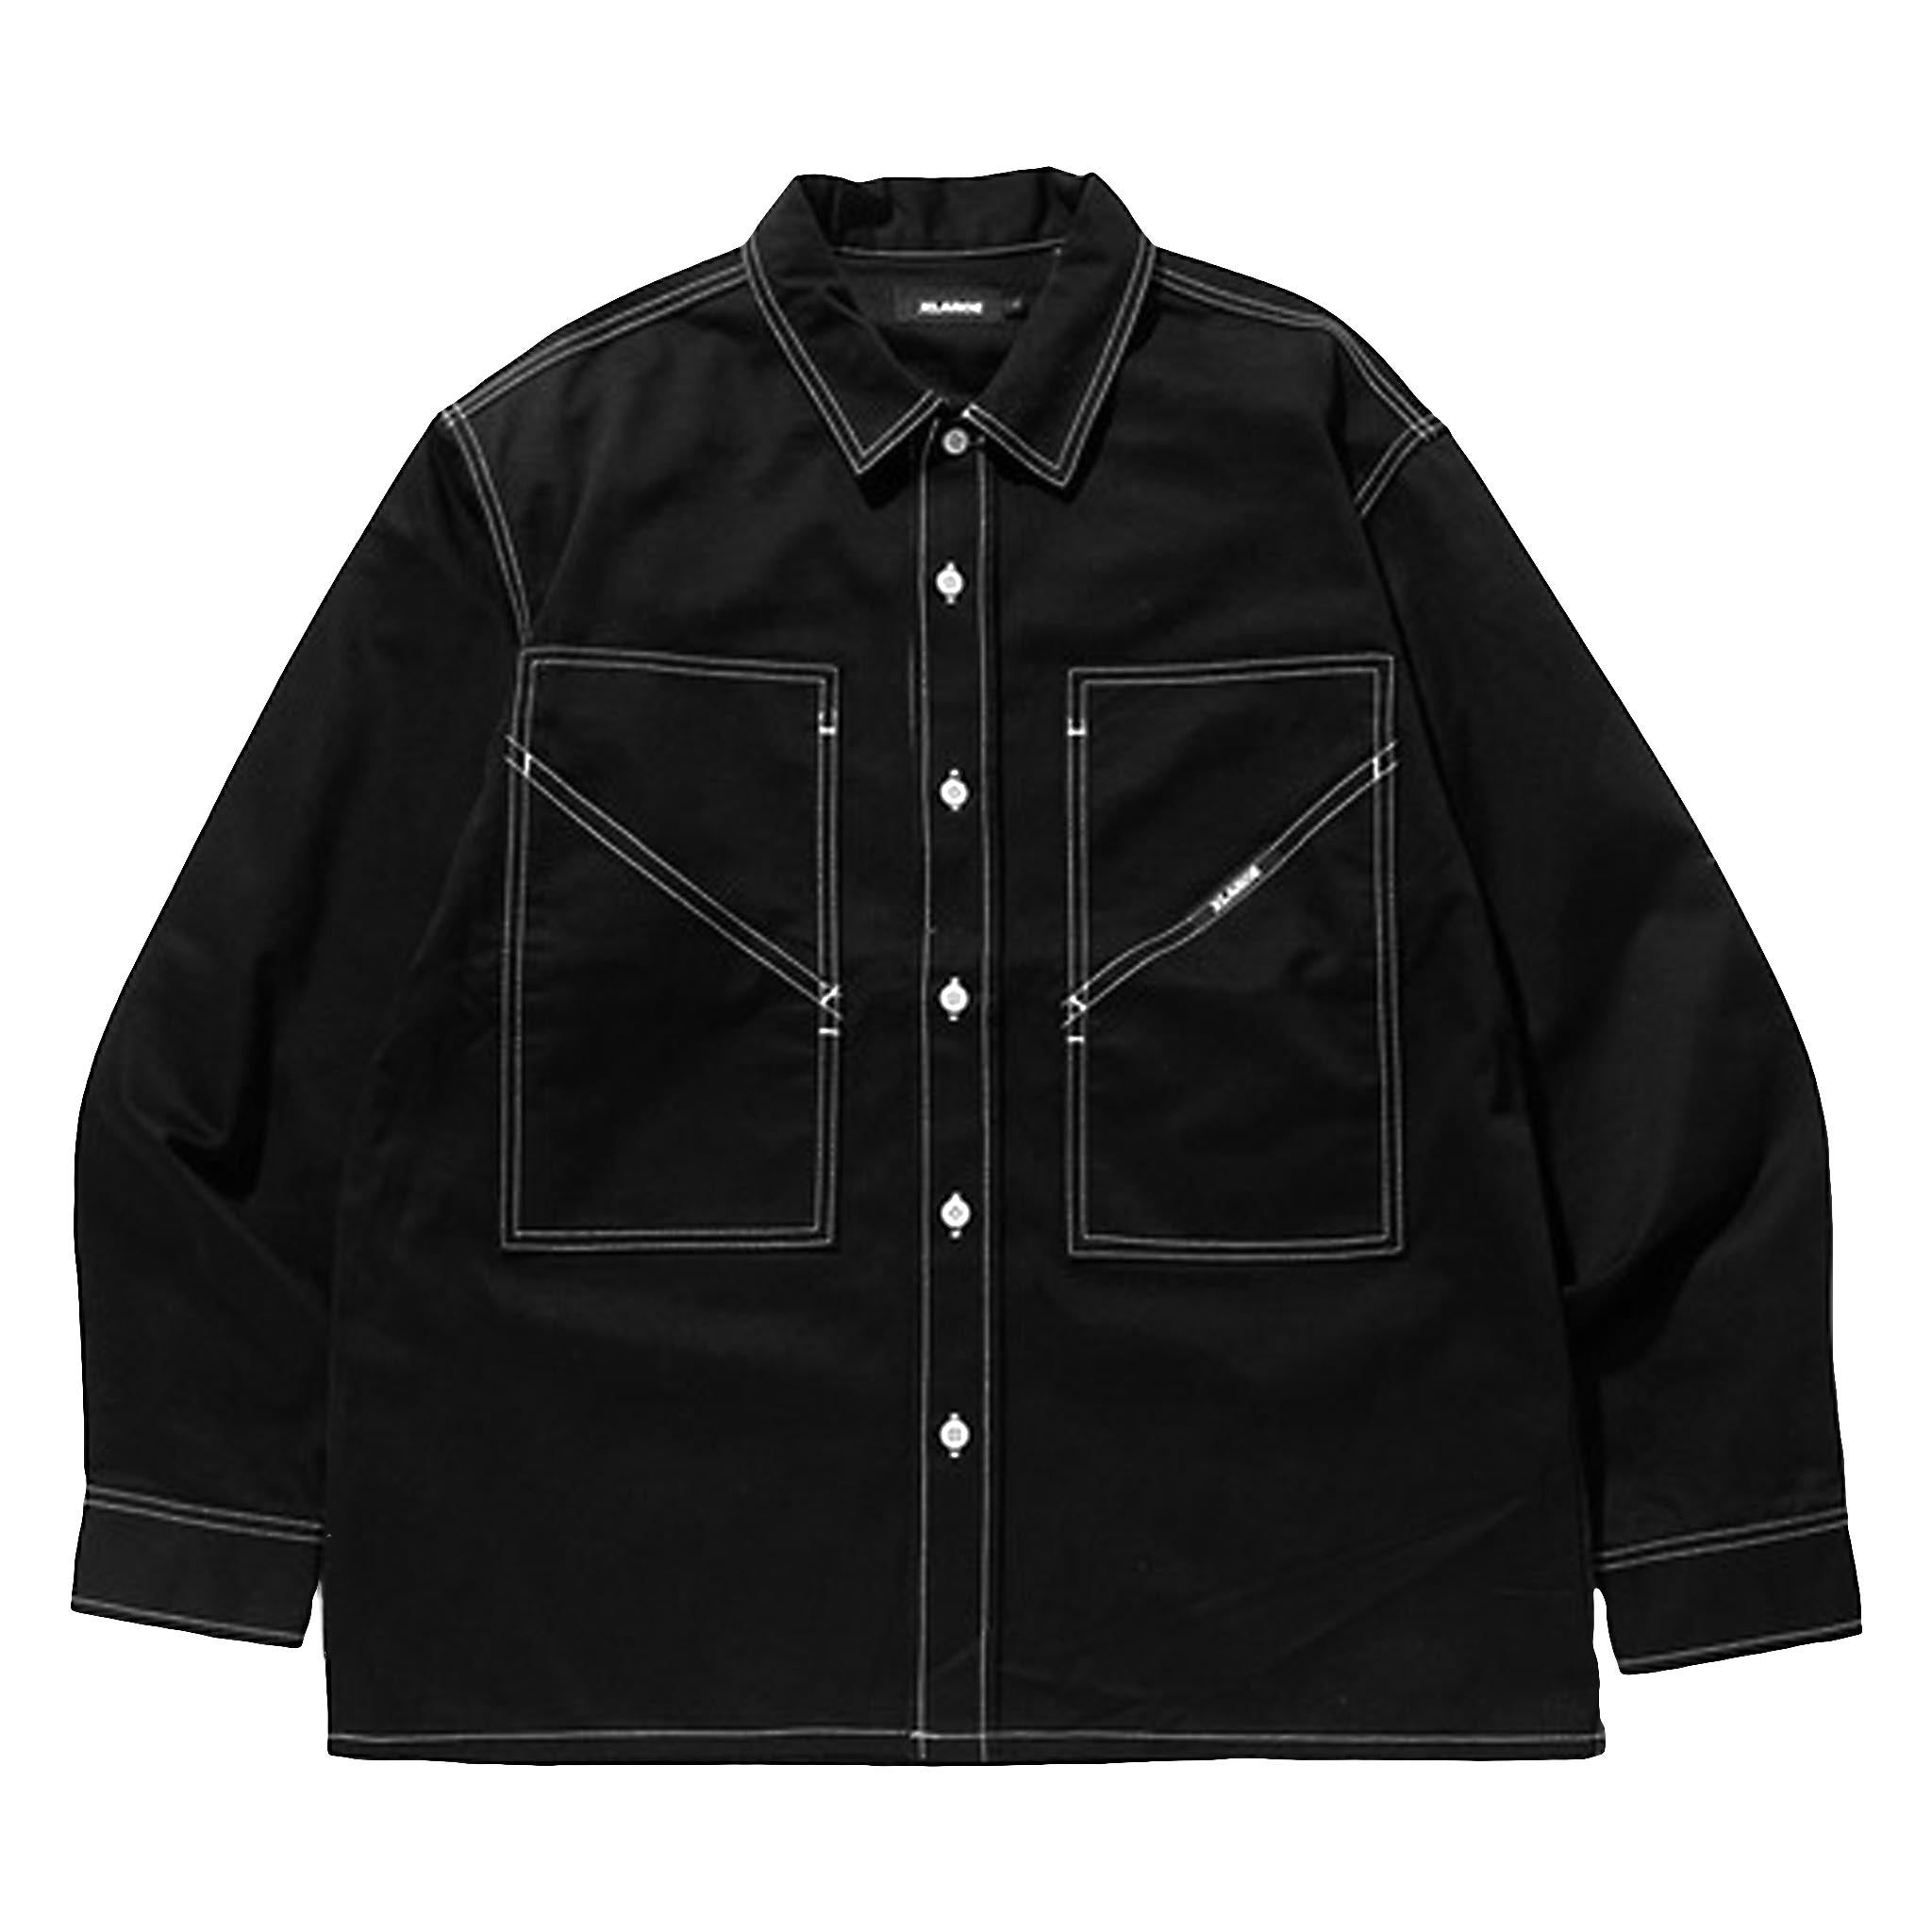 XLARGE Contrast Stitch Work Shirt Black